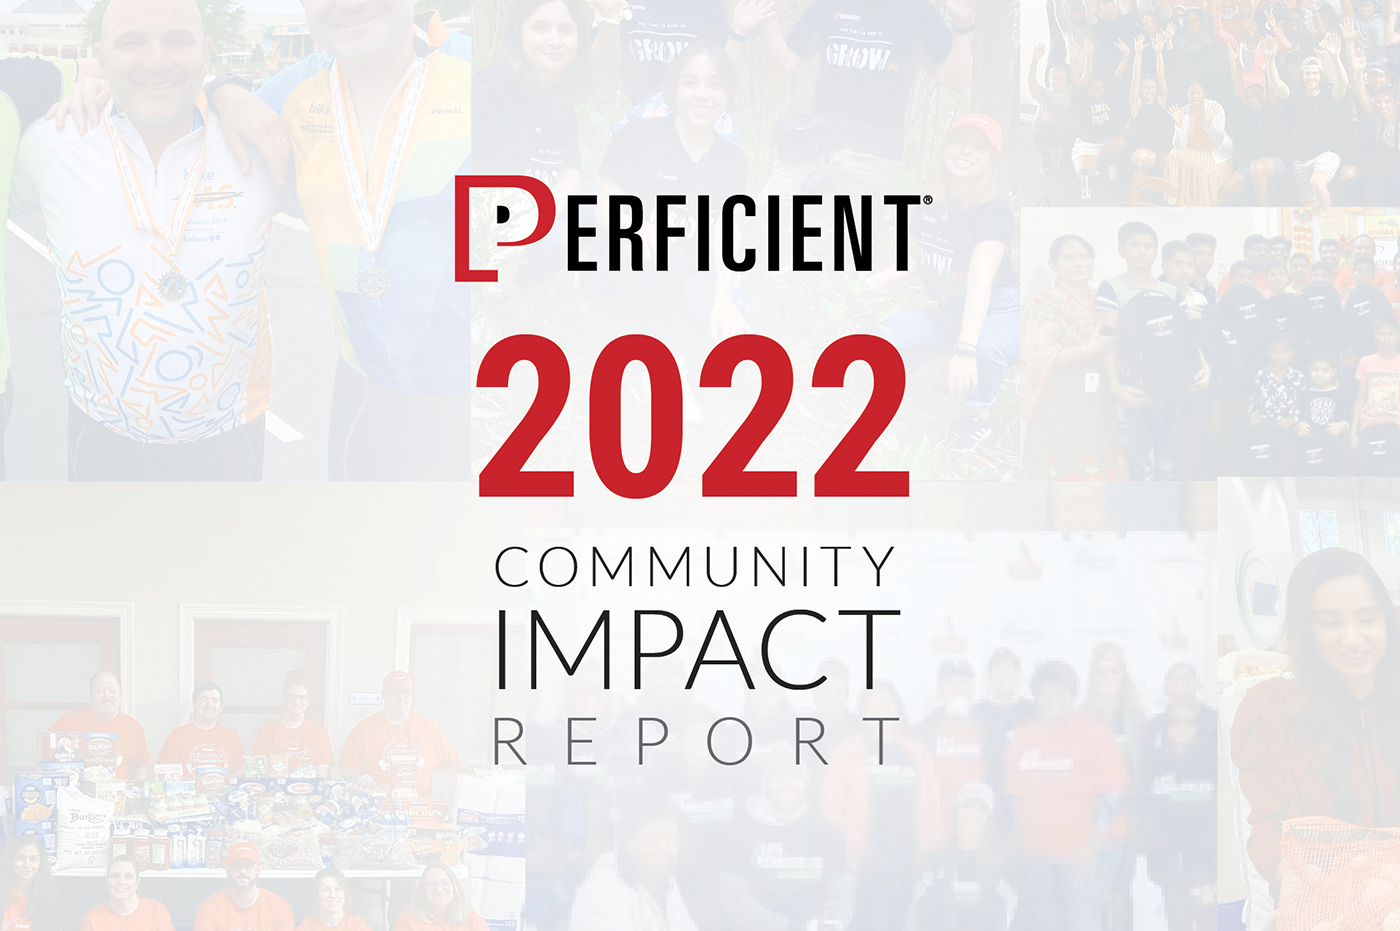 Perficient 2022 Community Impact Report.